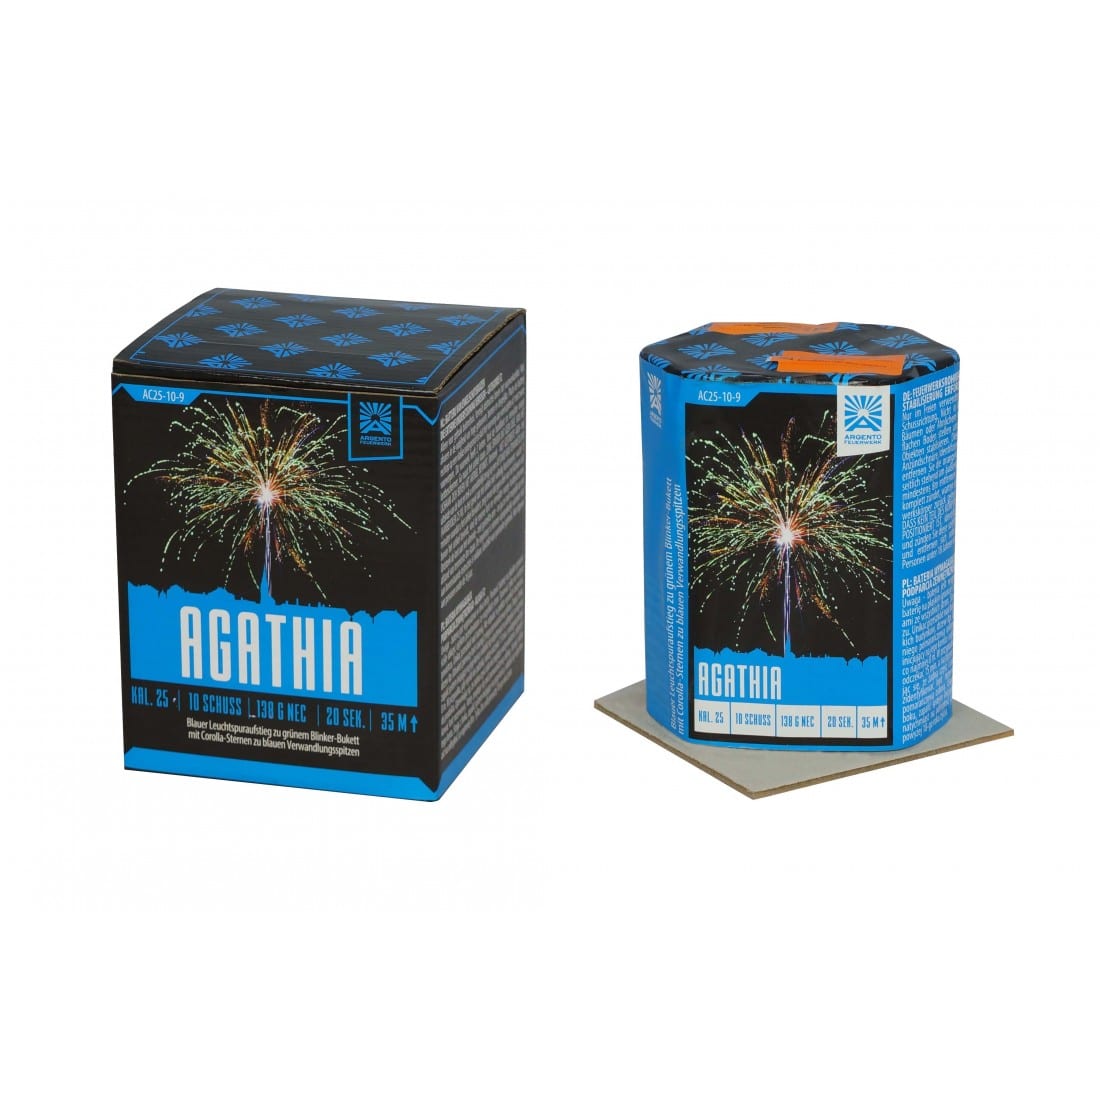 Argento Agathia Feuerwerksbatterie